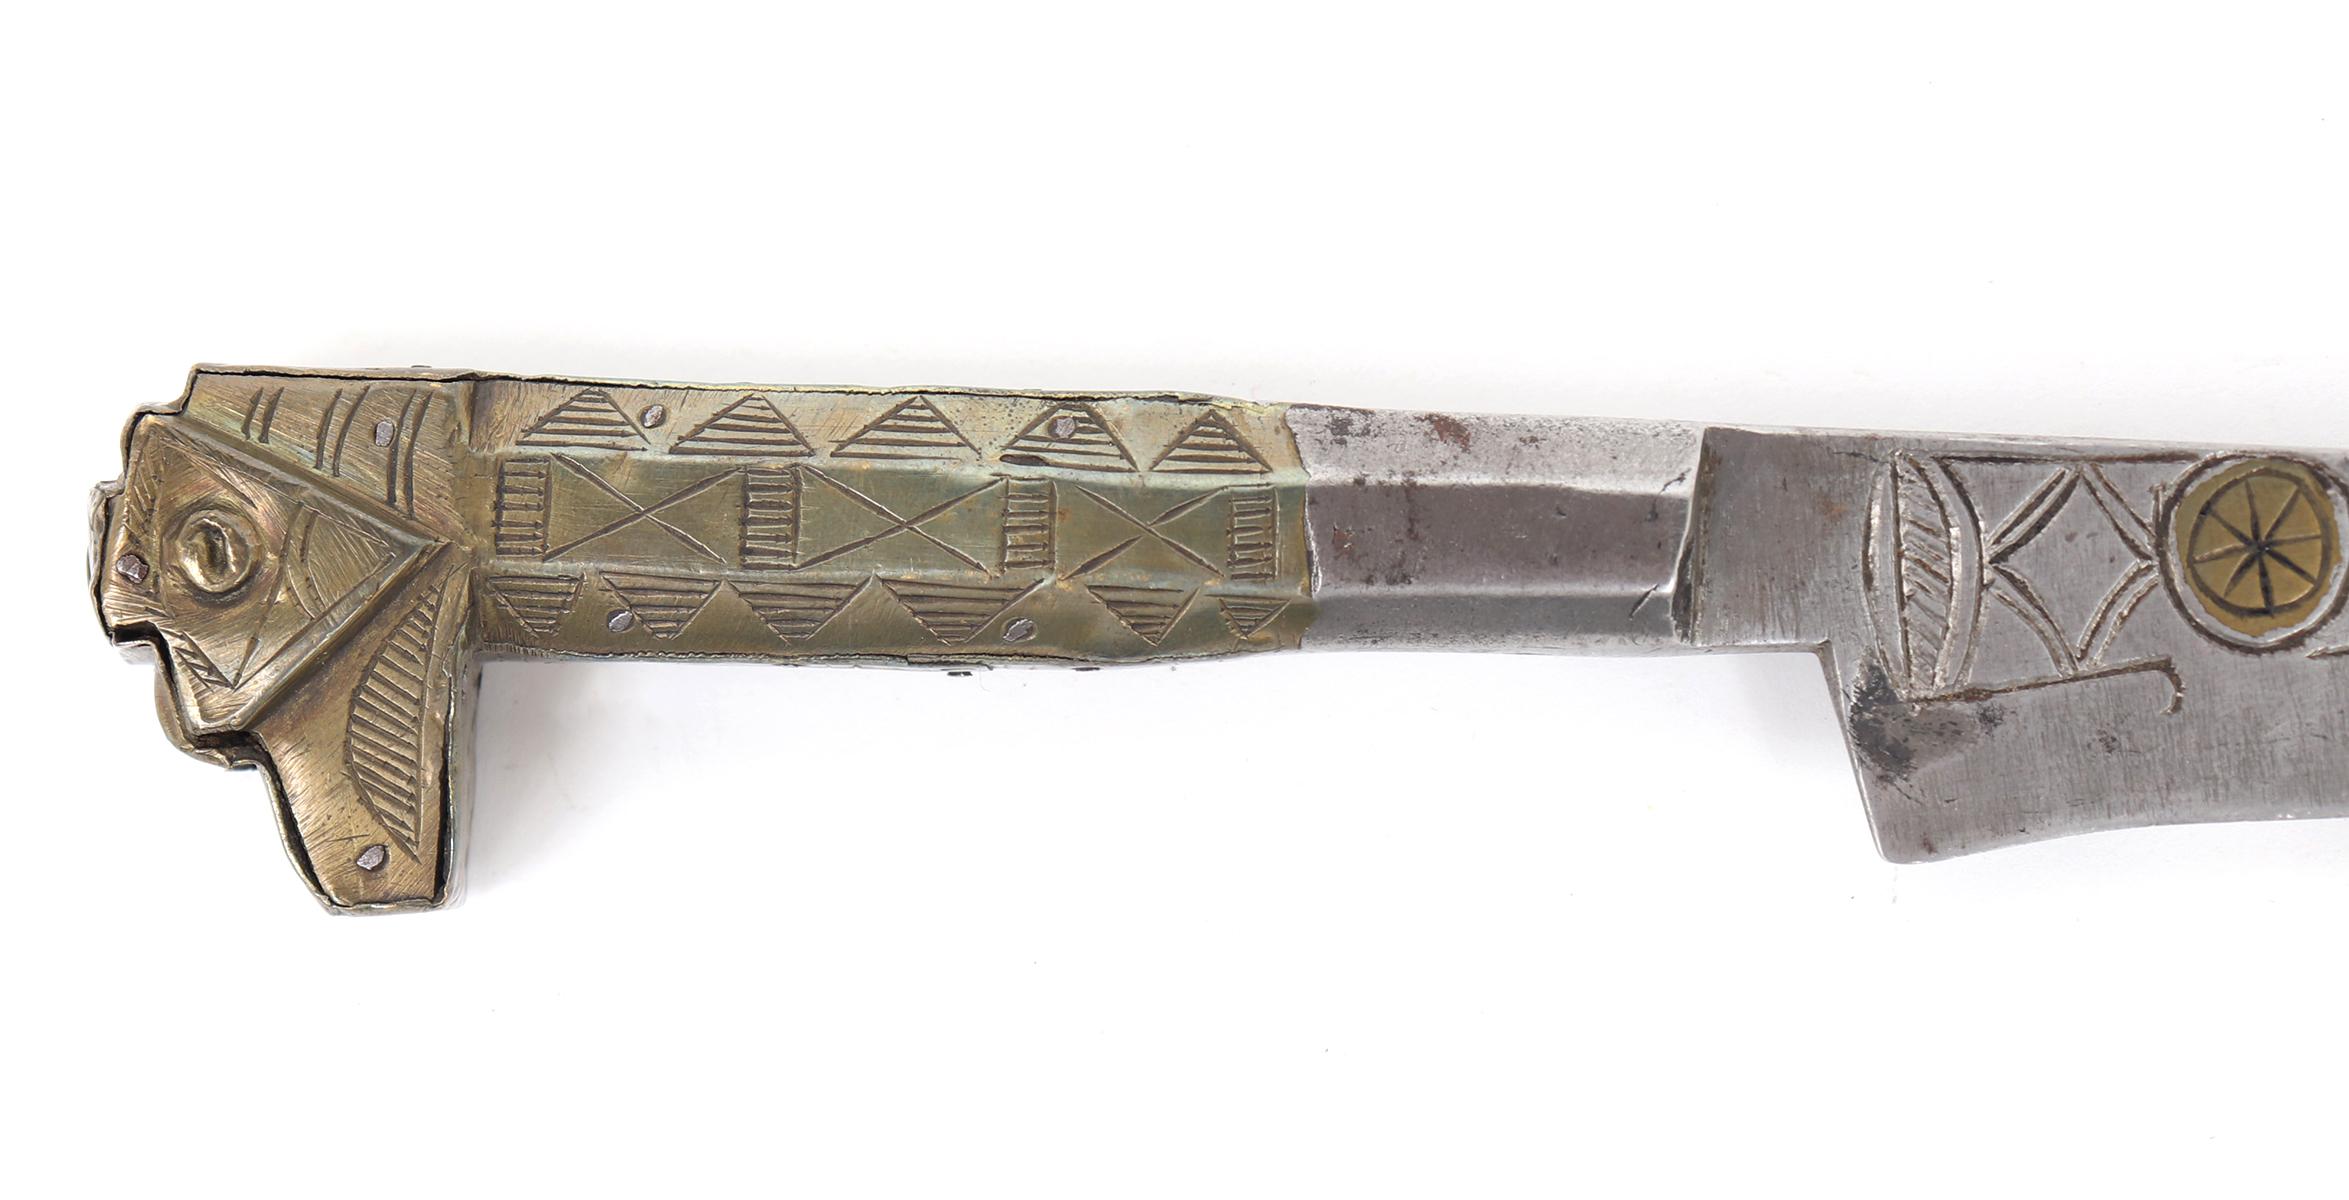 Moroccan "Flyssa" Dagger, Late 19th-Early 20th c.